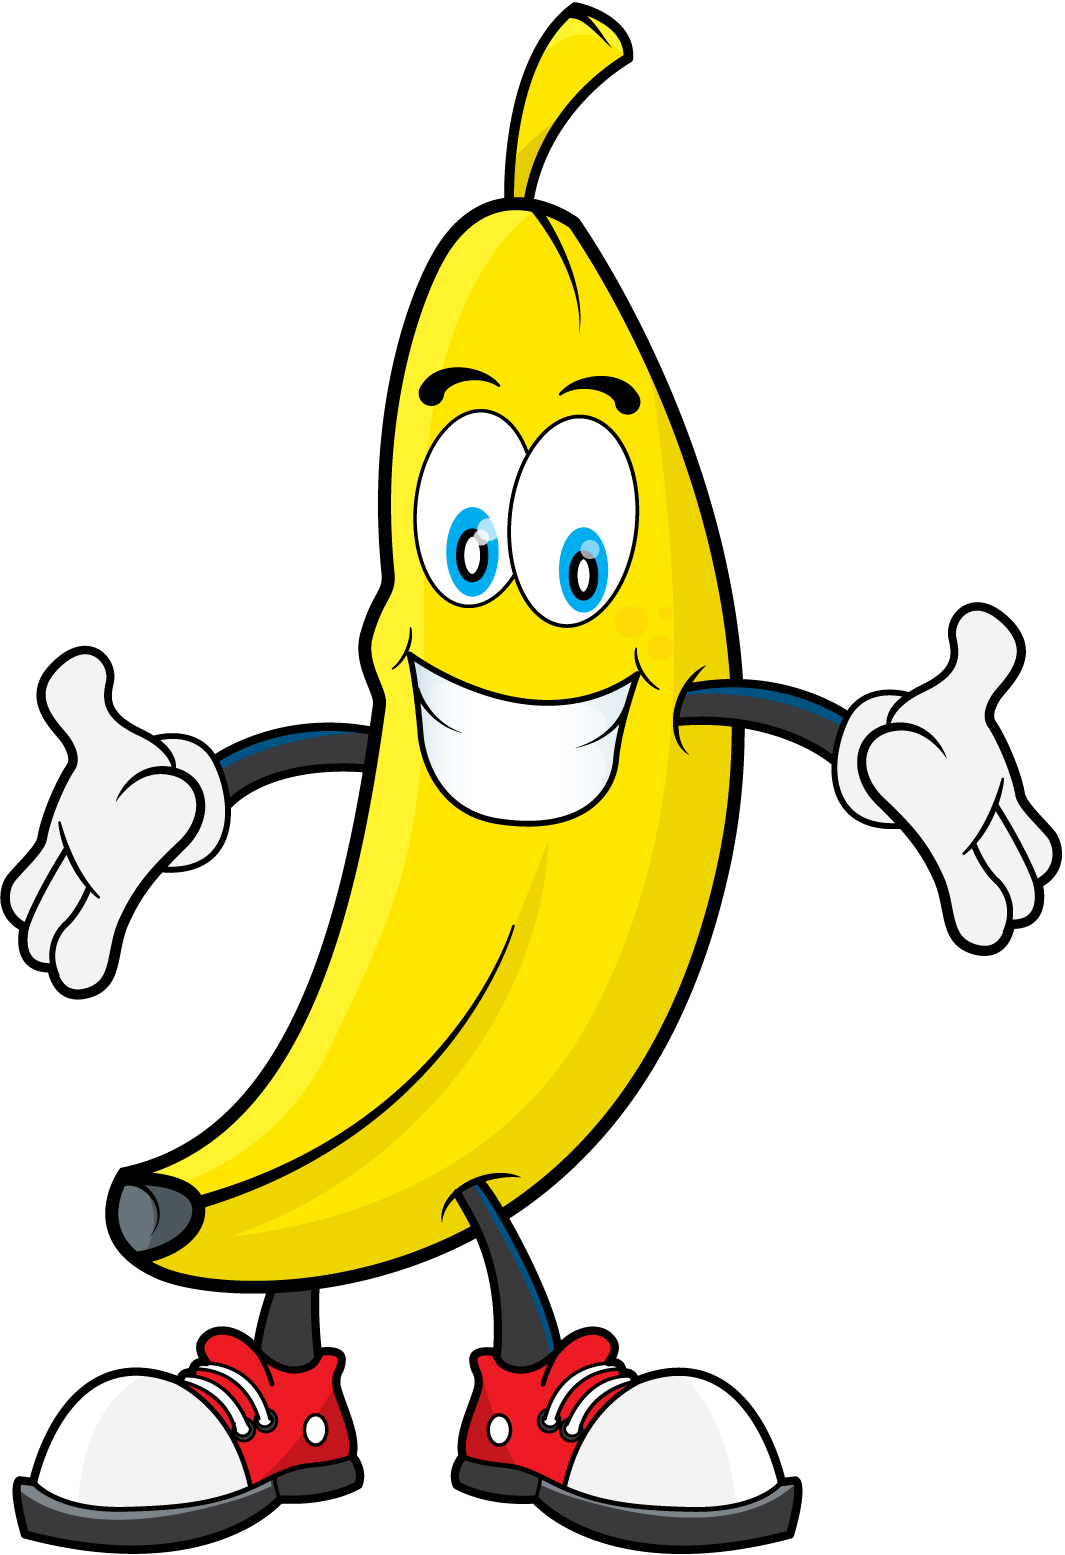 Cute banana clipart